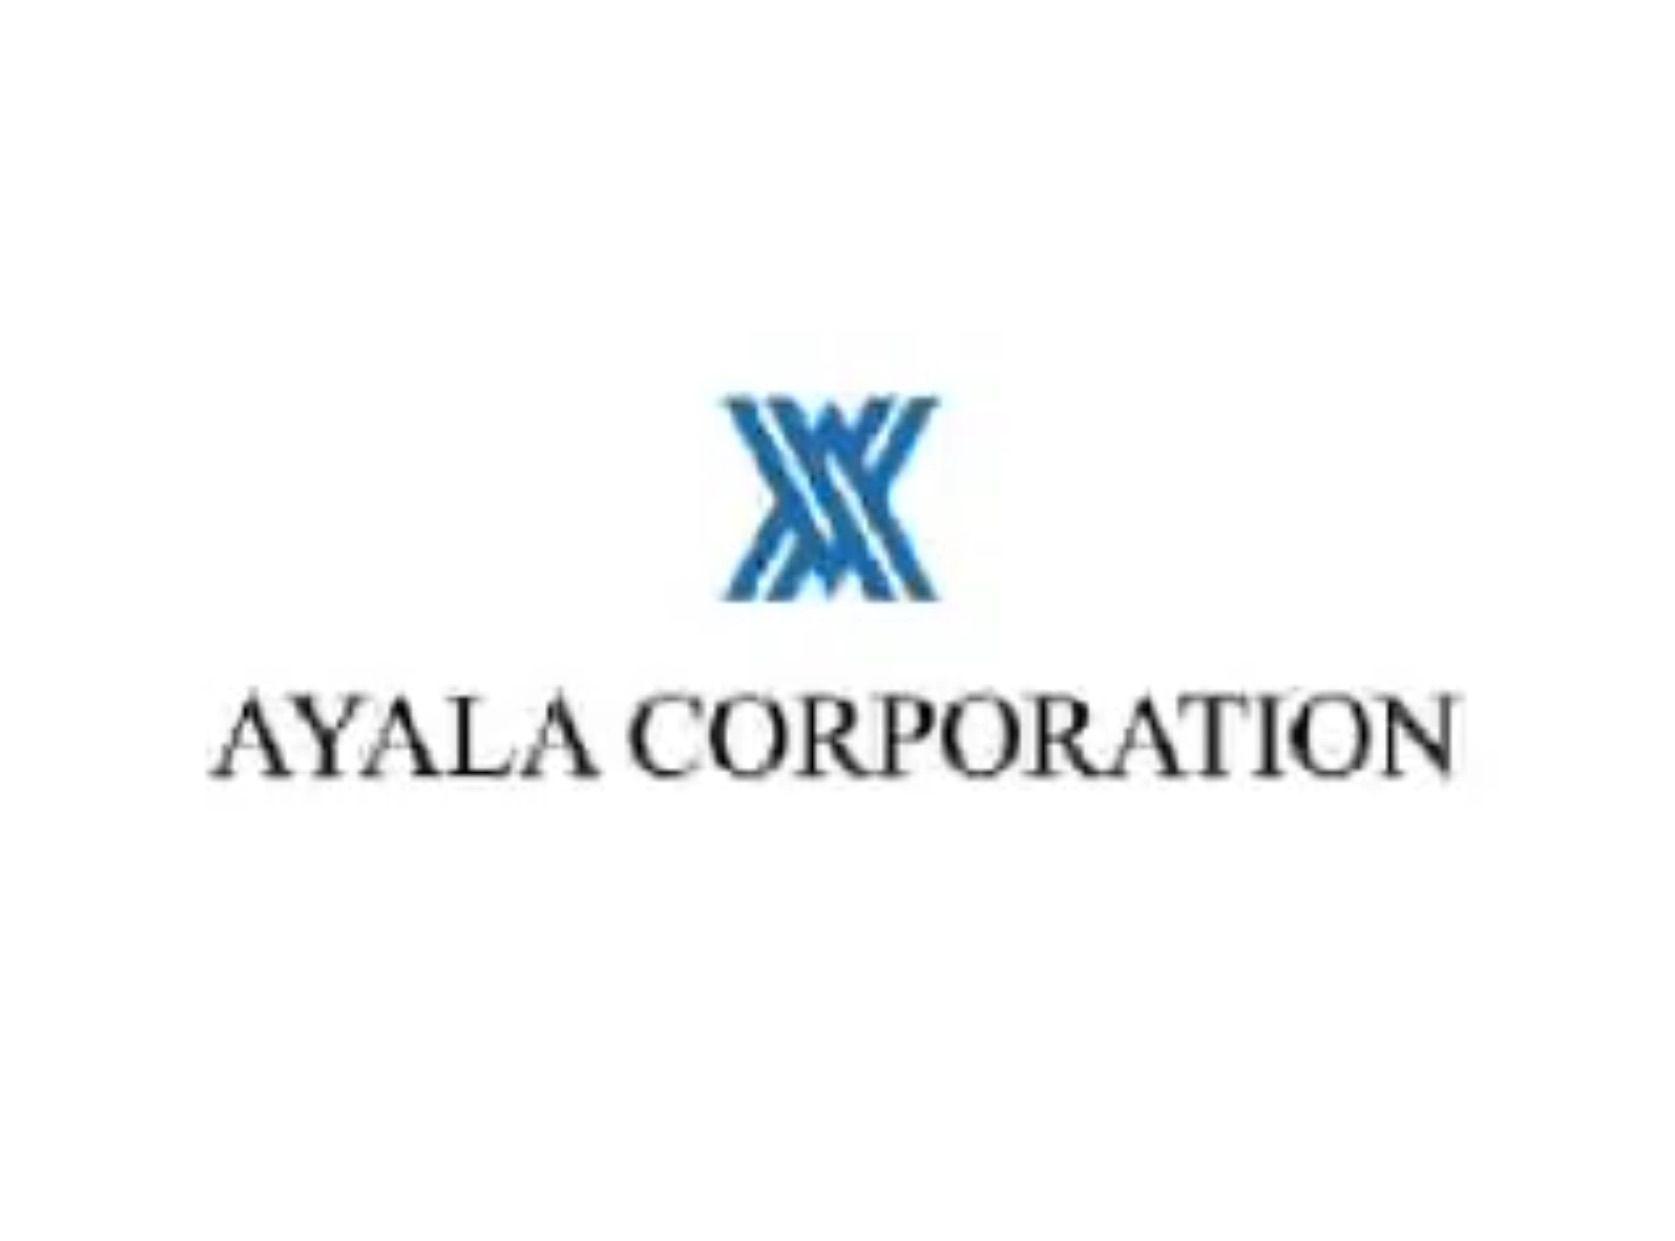 Ayala Logo - Ayala Corporation | Logopedia | FANDOM powered by Wikia